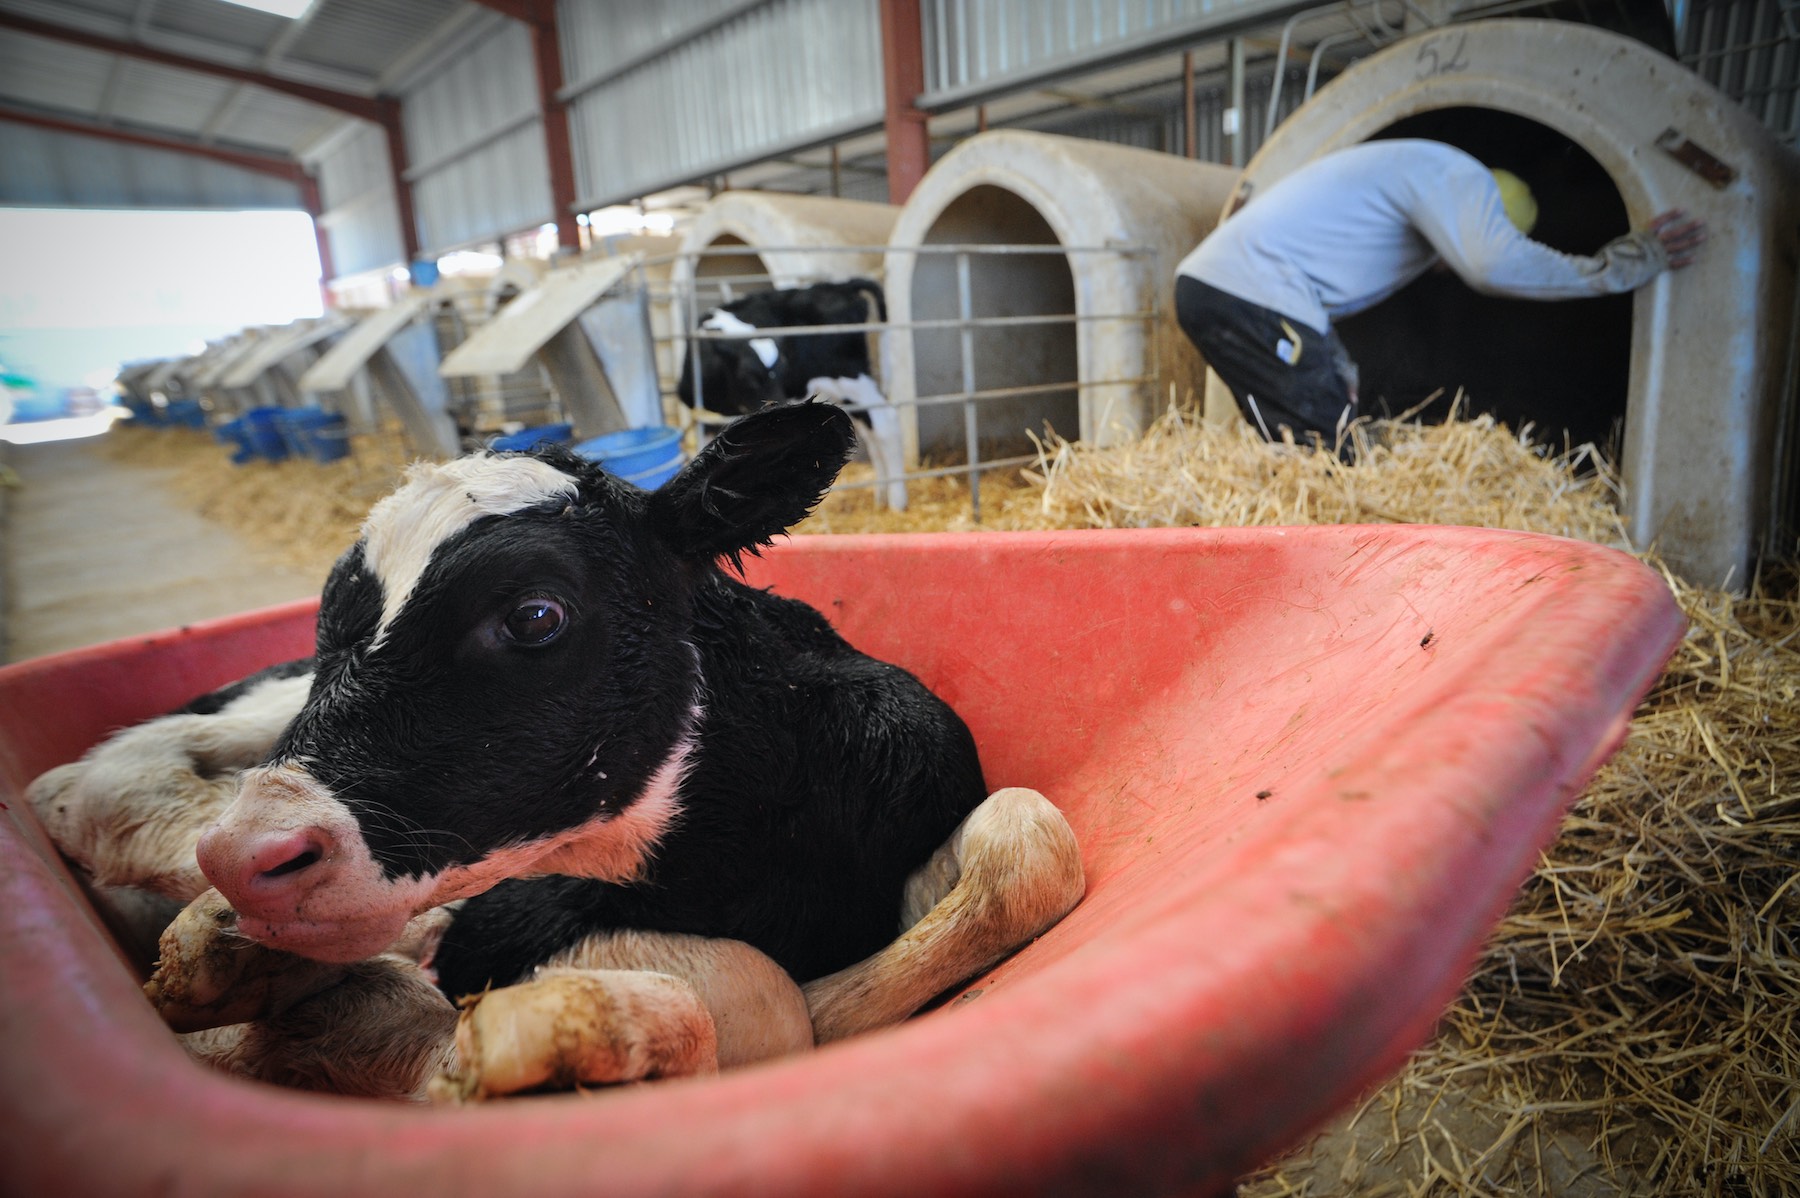 Dairy Veal Farm / We Animals Media